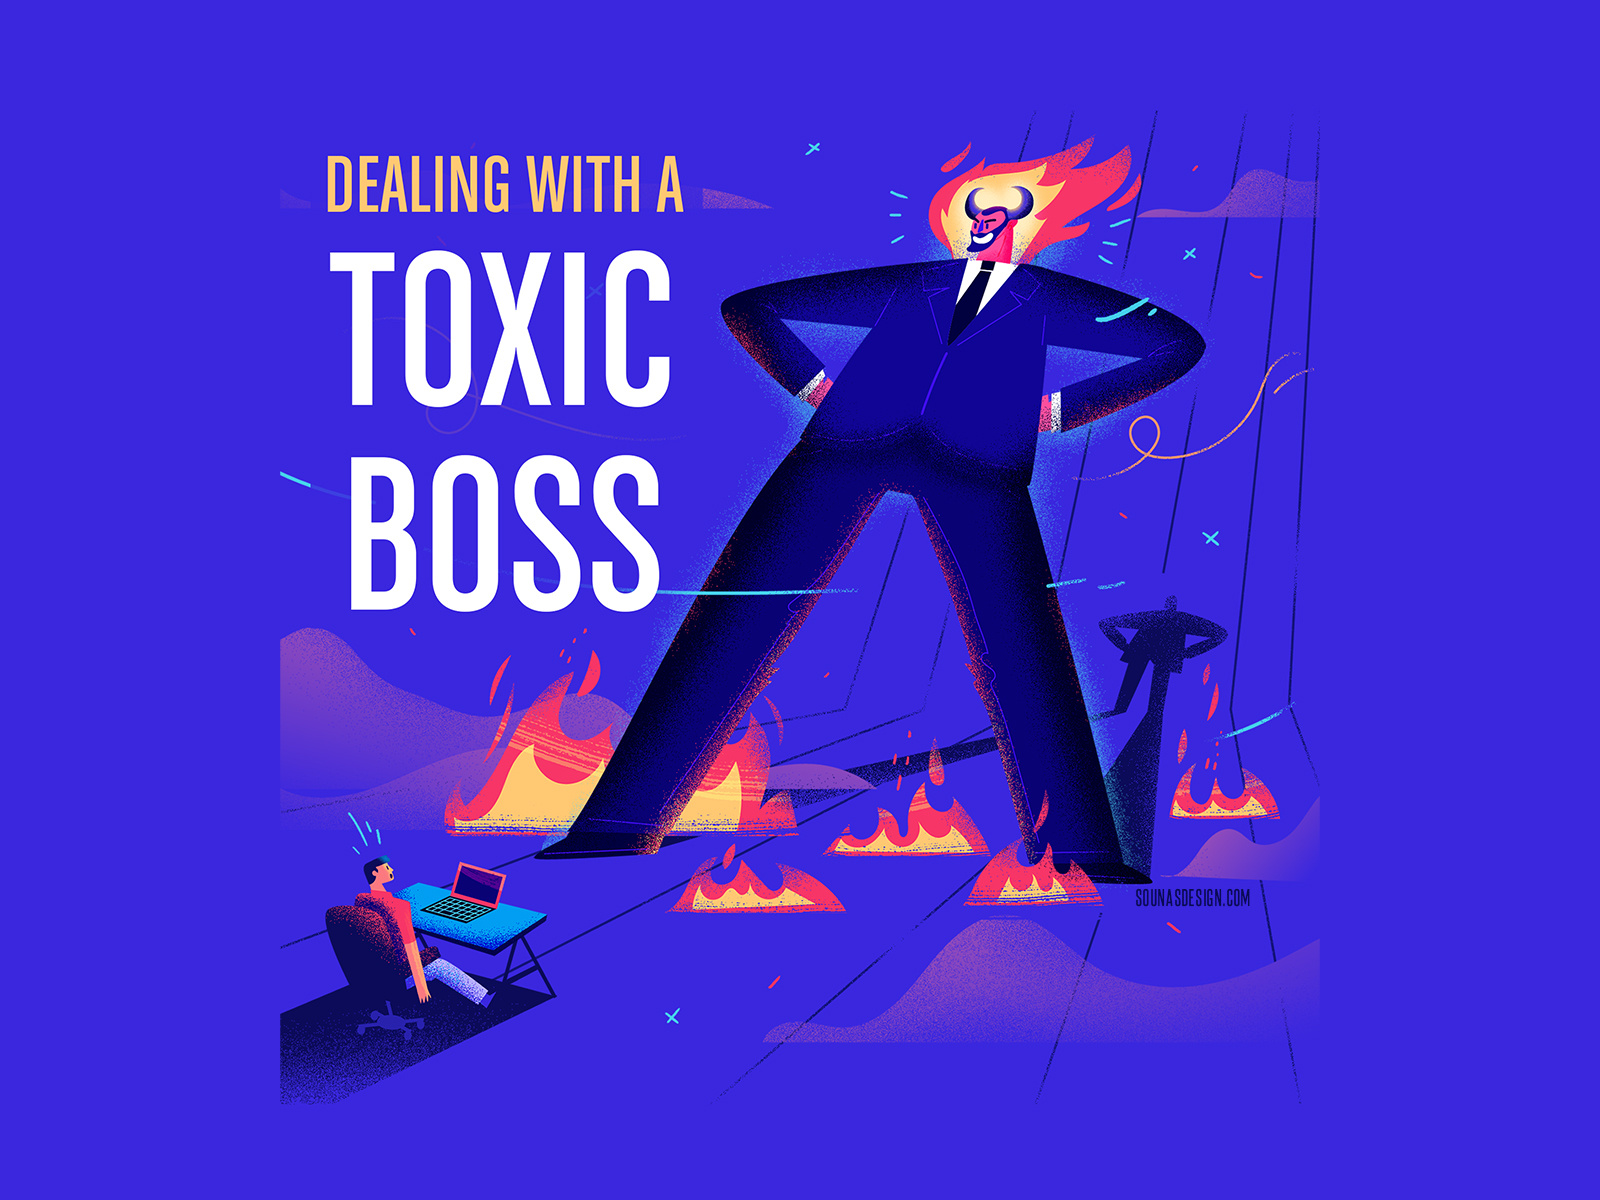 Toxic Boss by Elias Sounas on Dribbble